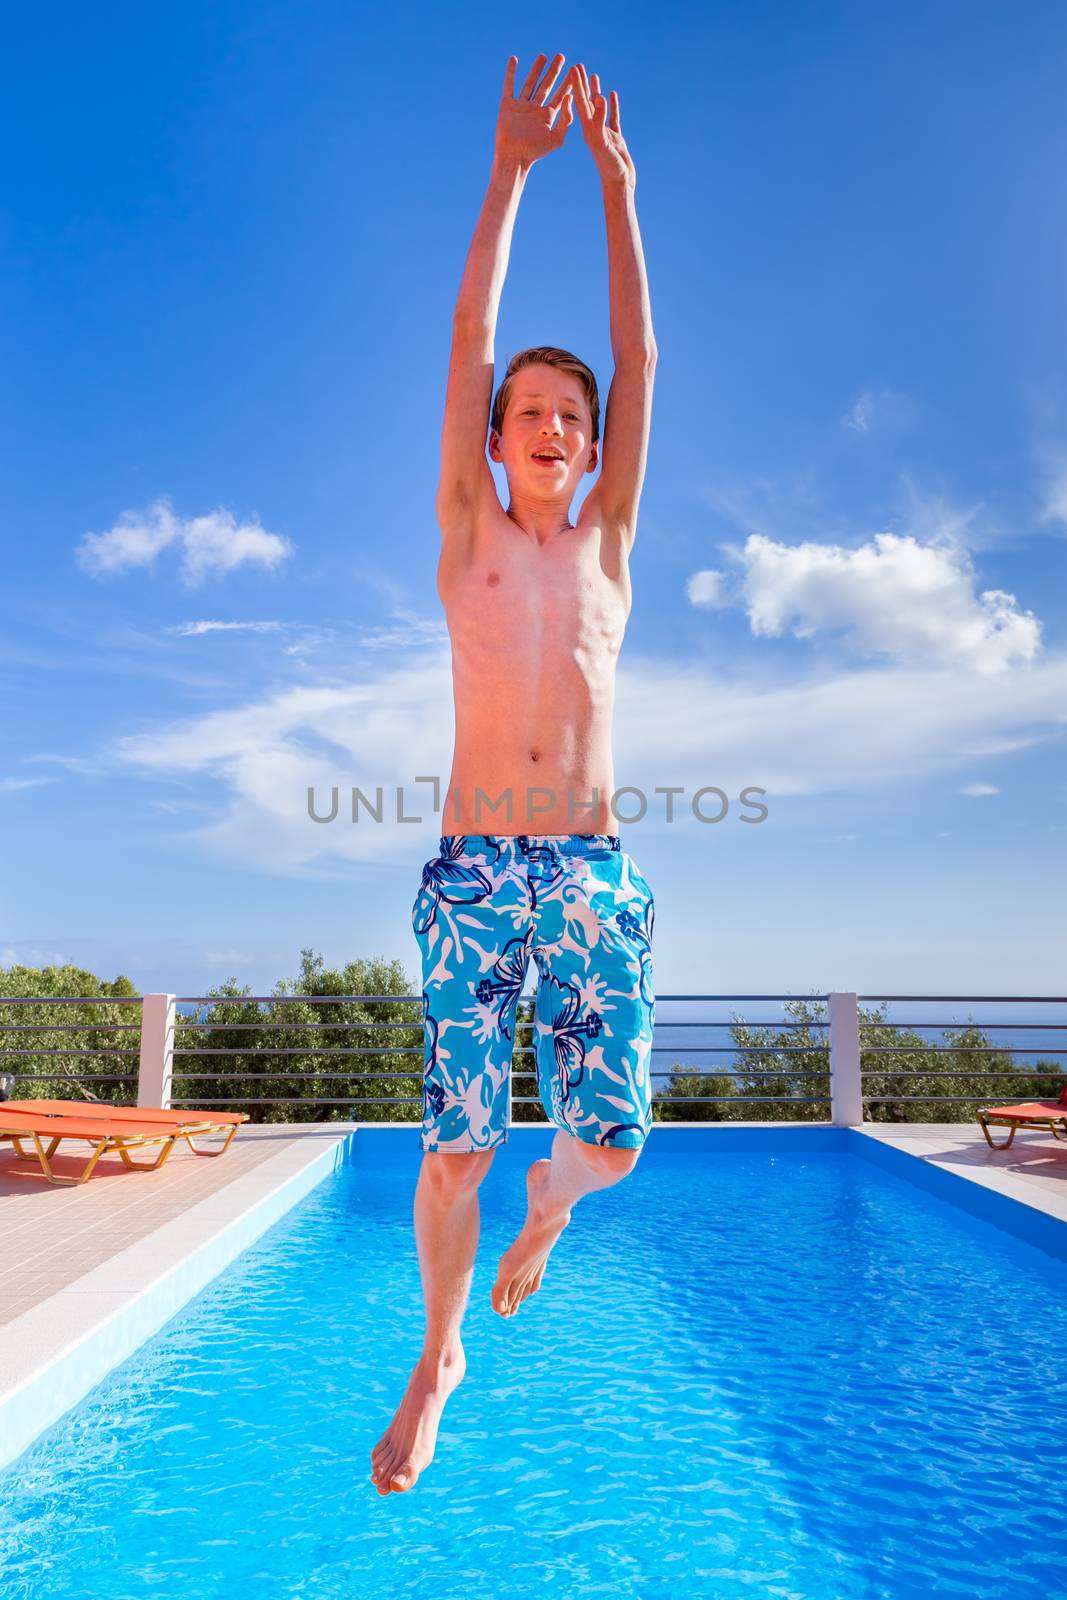 European teenage boy jumping high above blue swimming pool